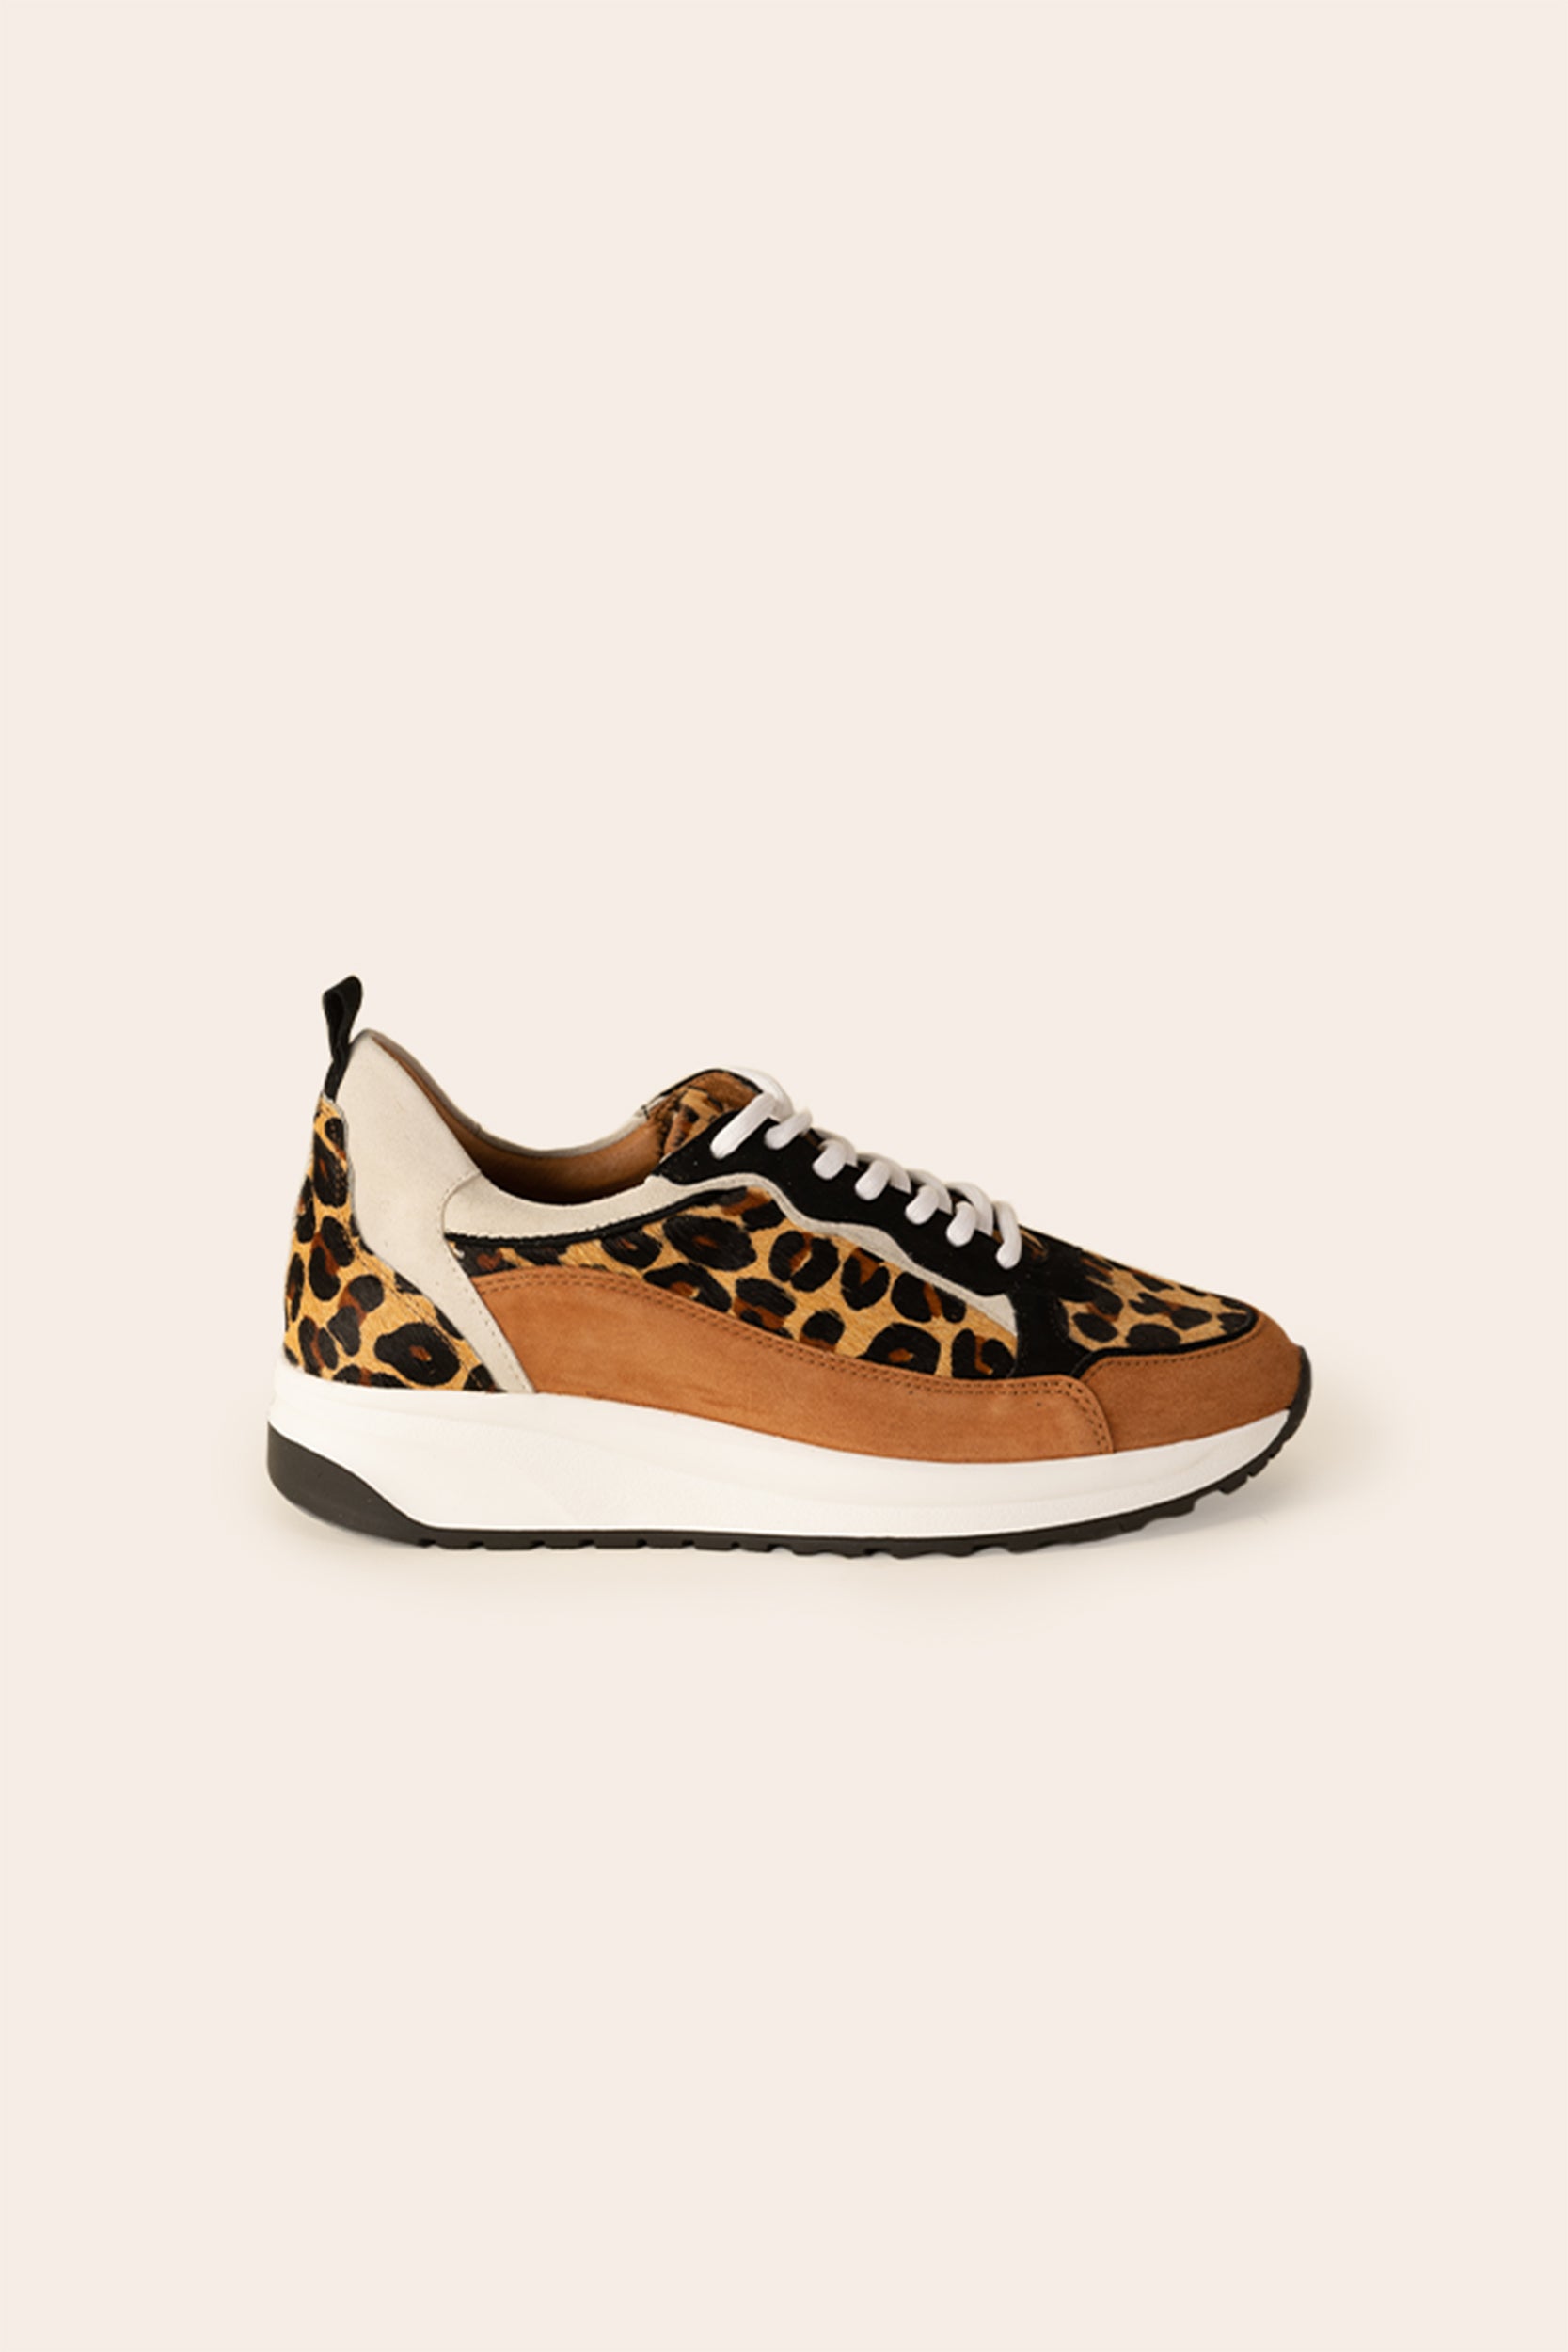 Leopard maximilien sneakers